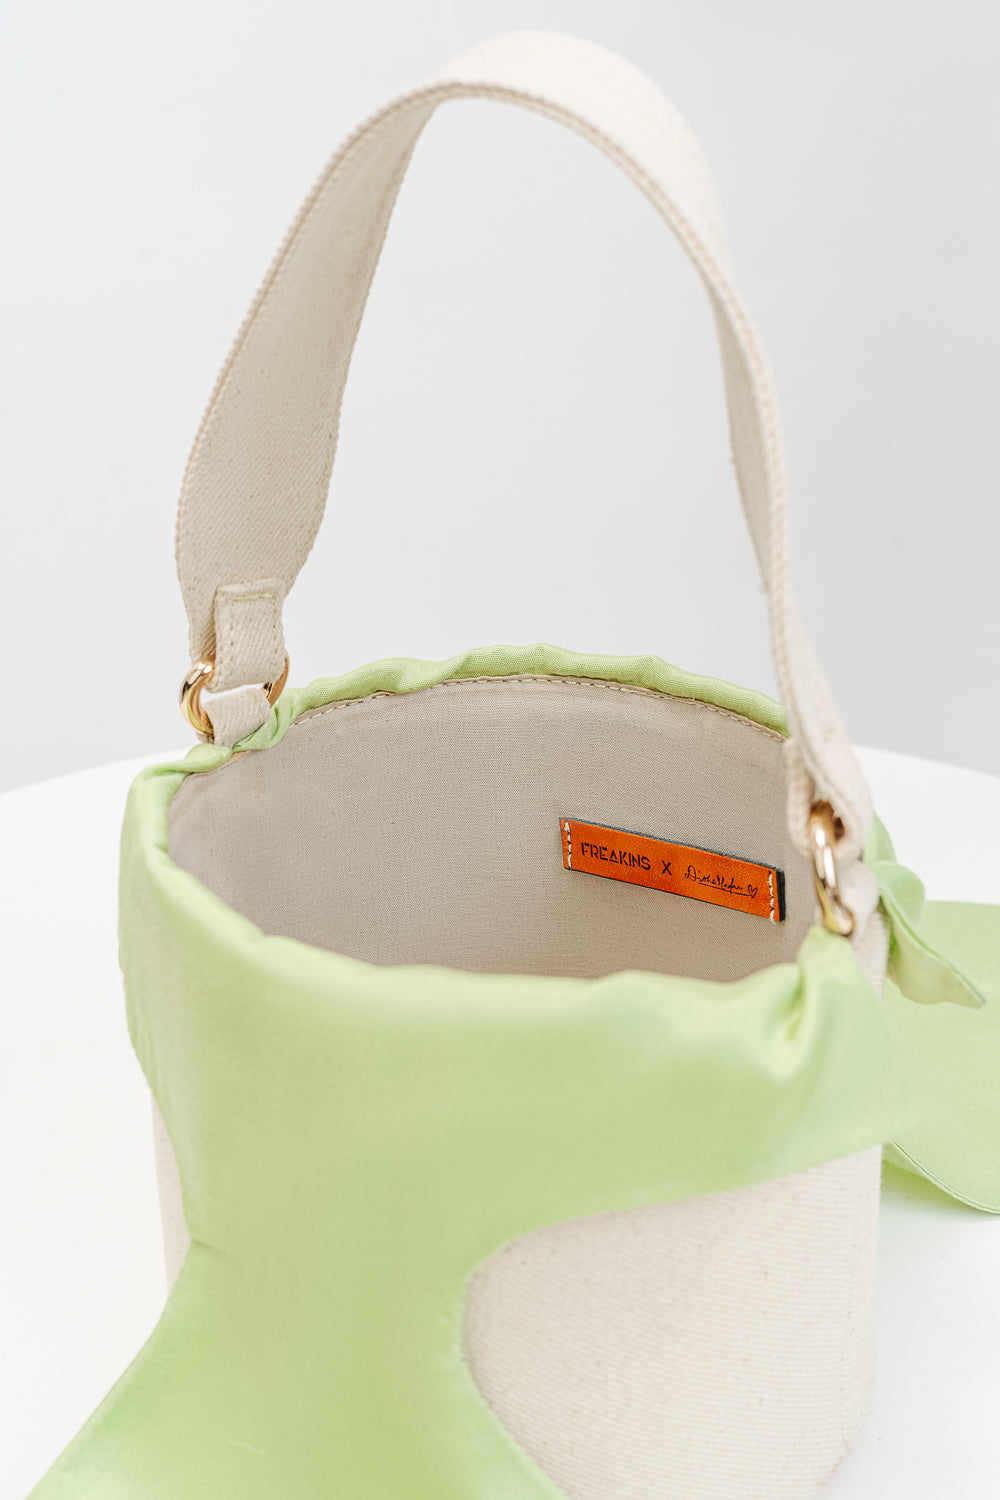 The White-Green Bucket Bag